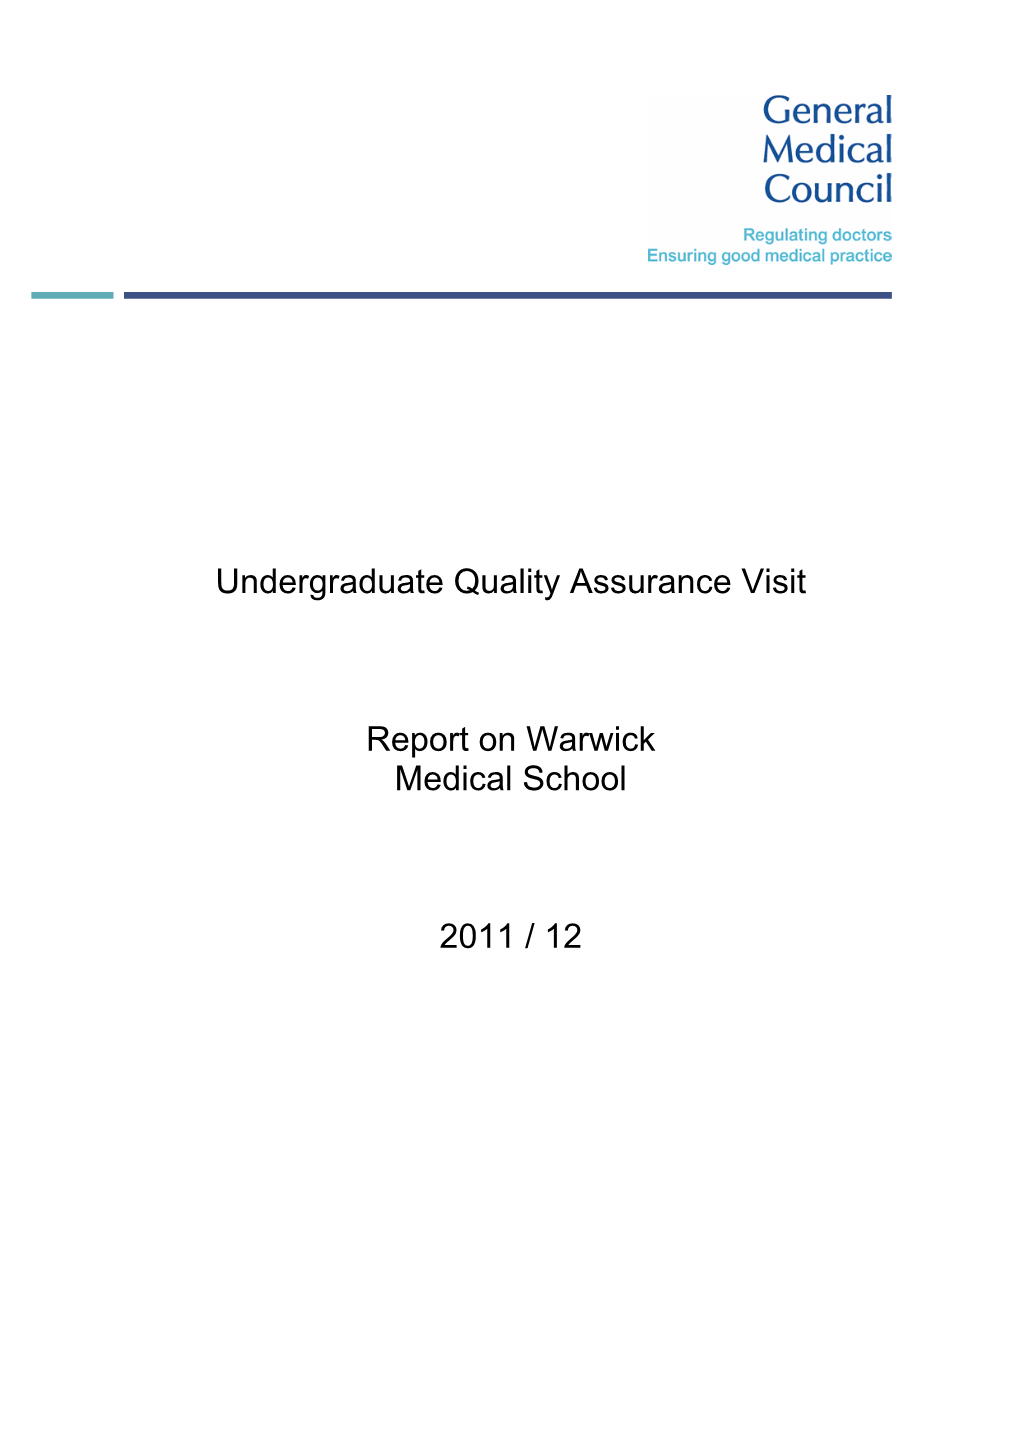 Undergraduate Quality Assurance Visit Report on Warwick Medical